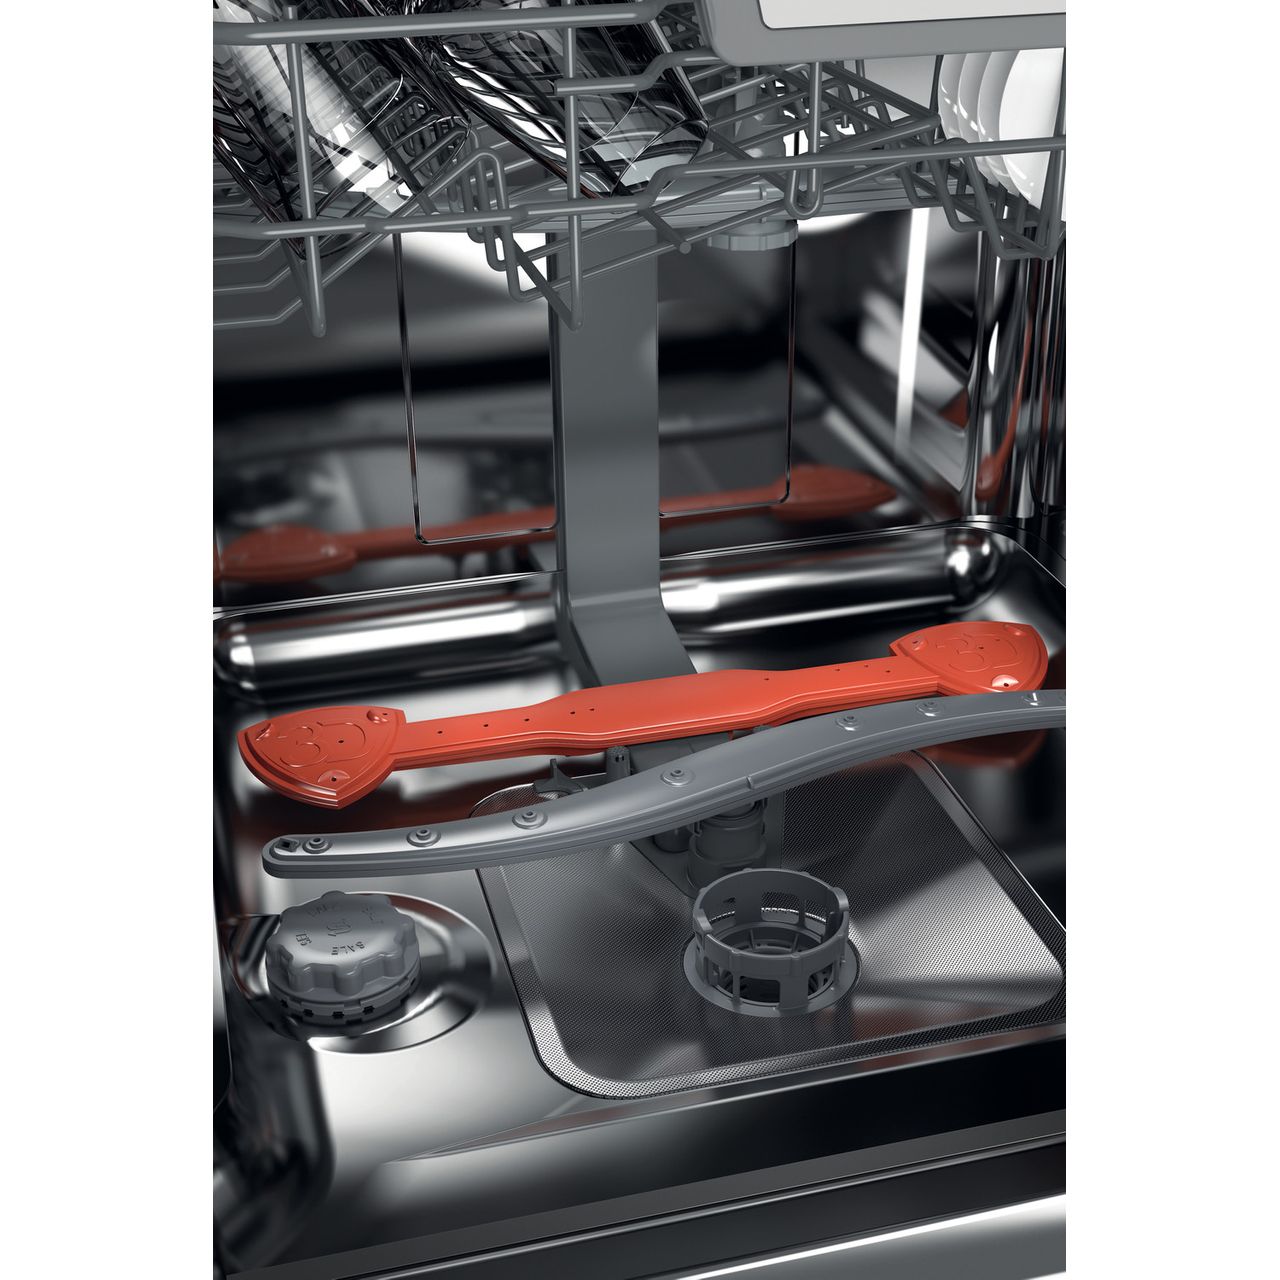 hotpoint dishwasher stainless steel